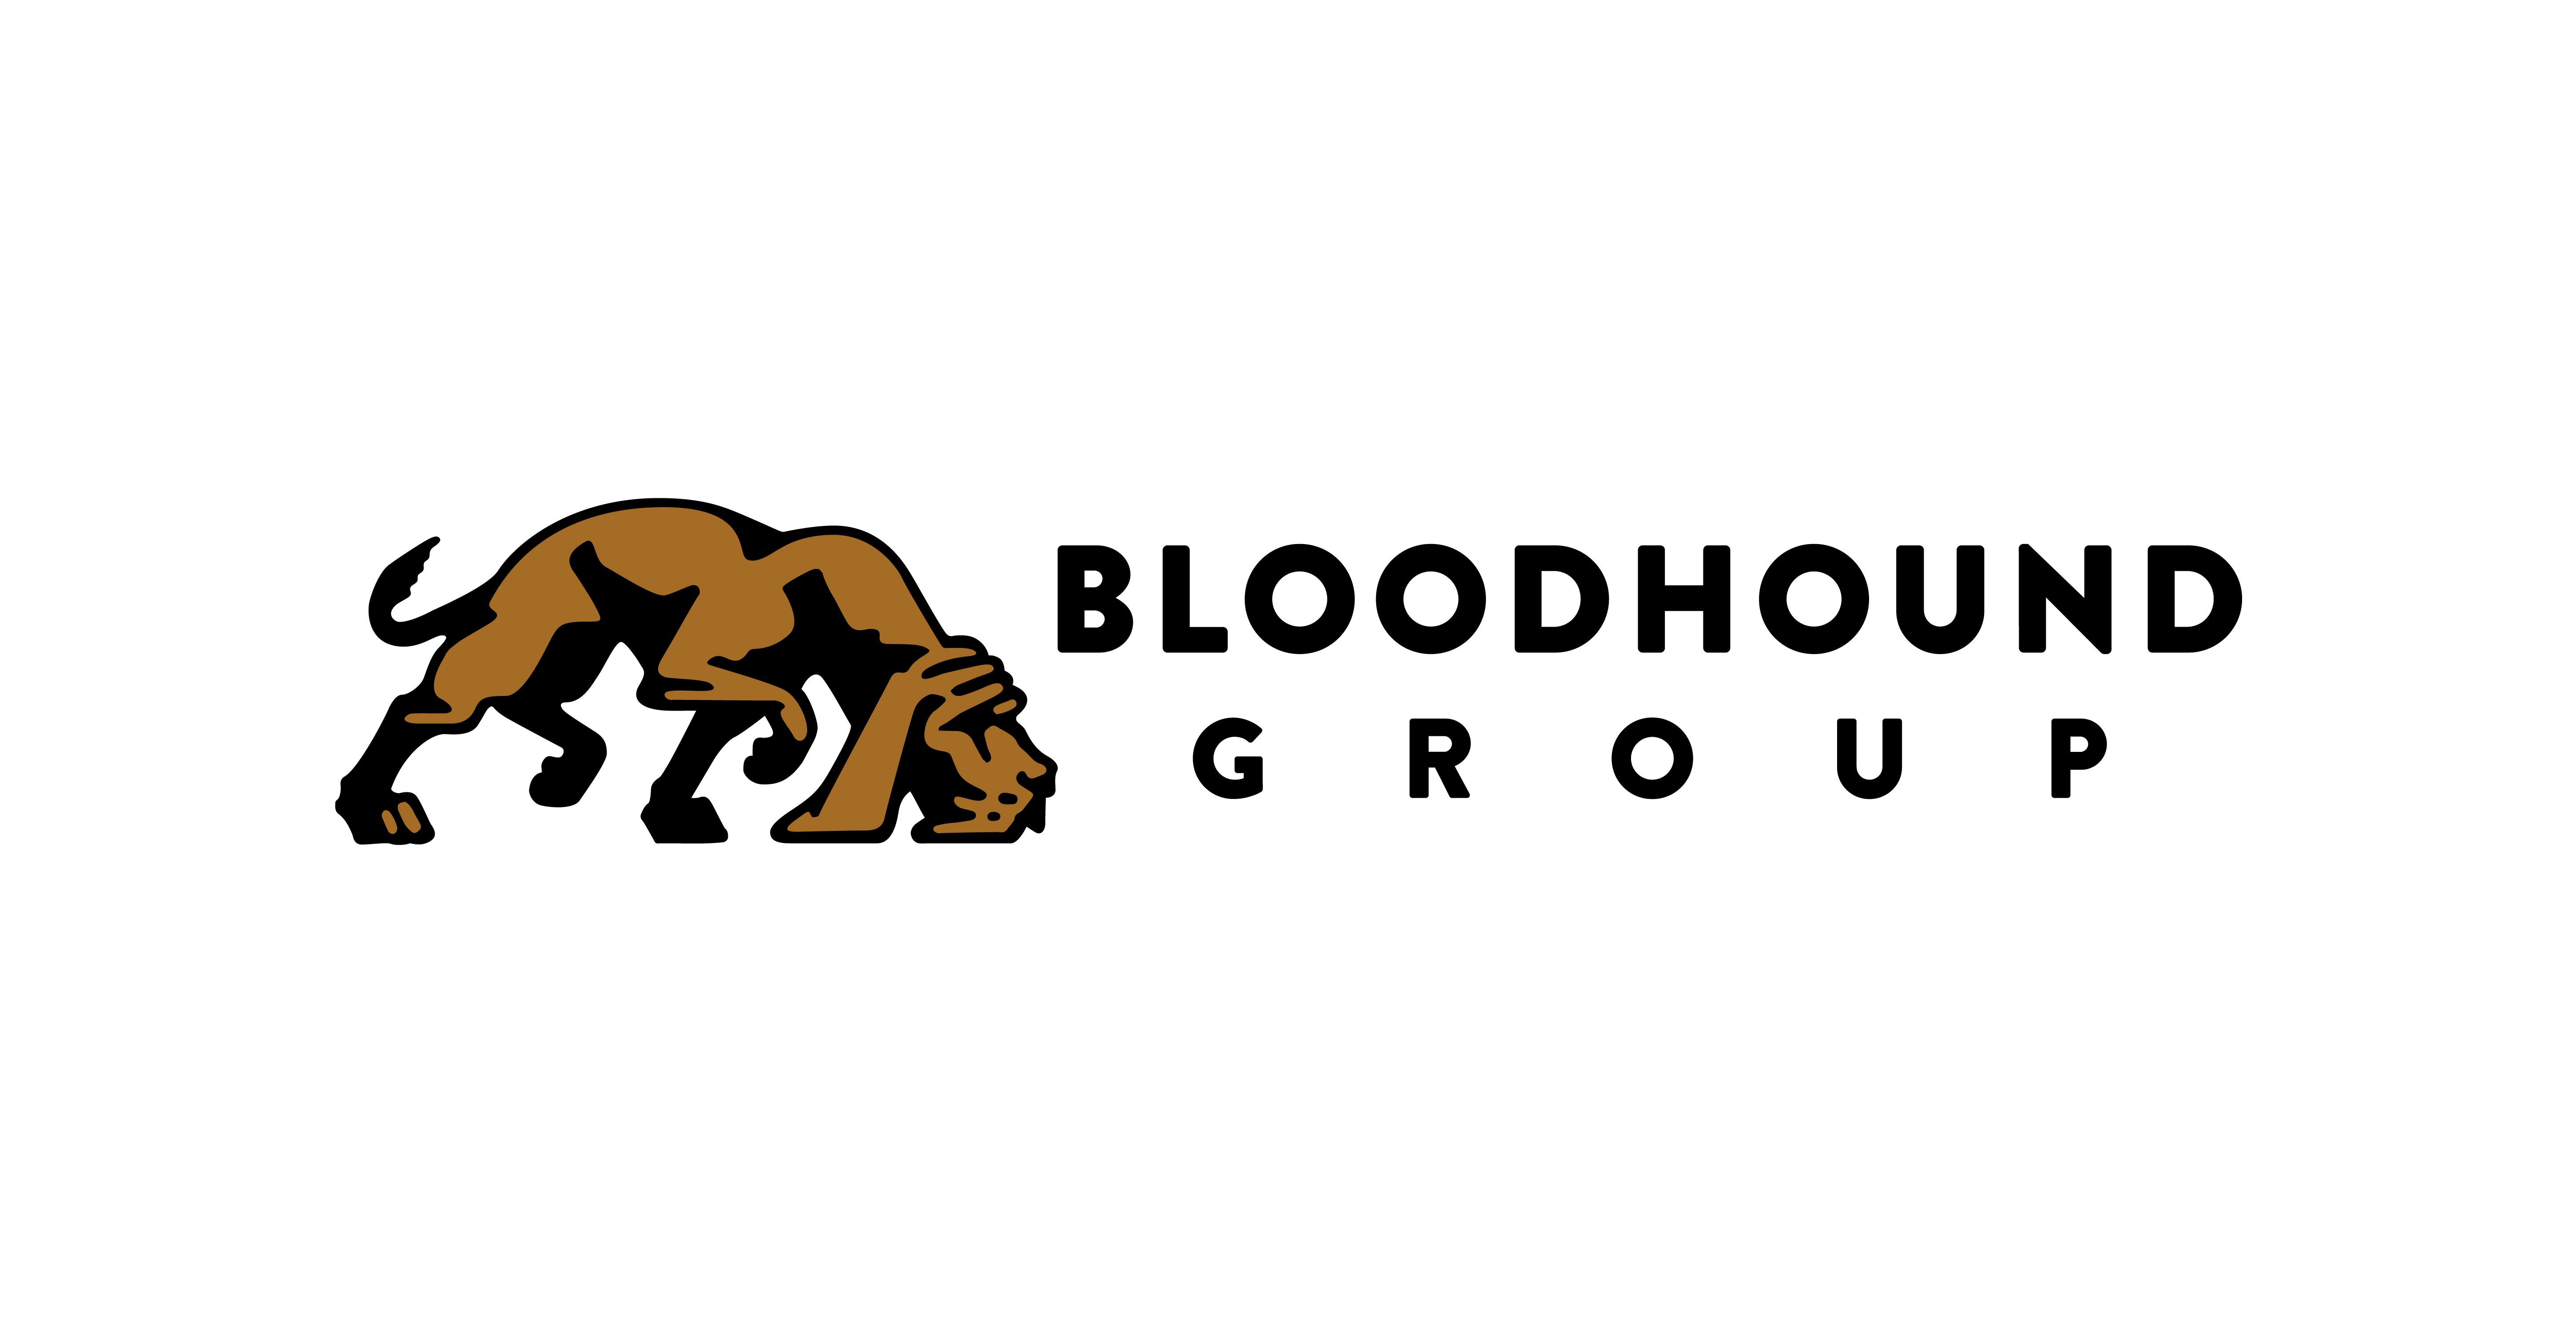 Bloodhound Branding Group